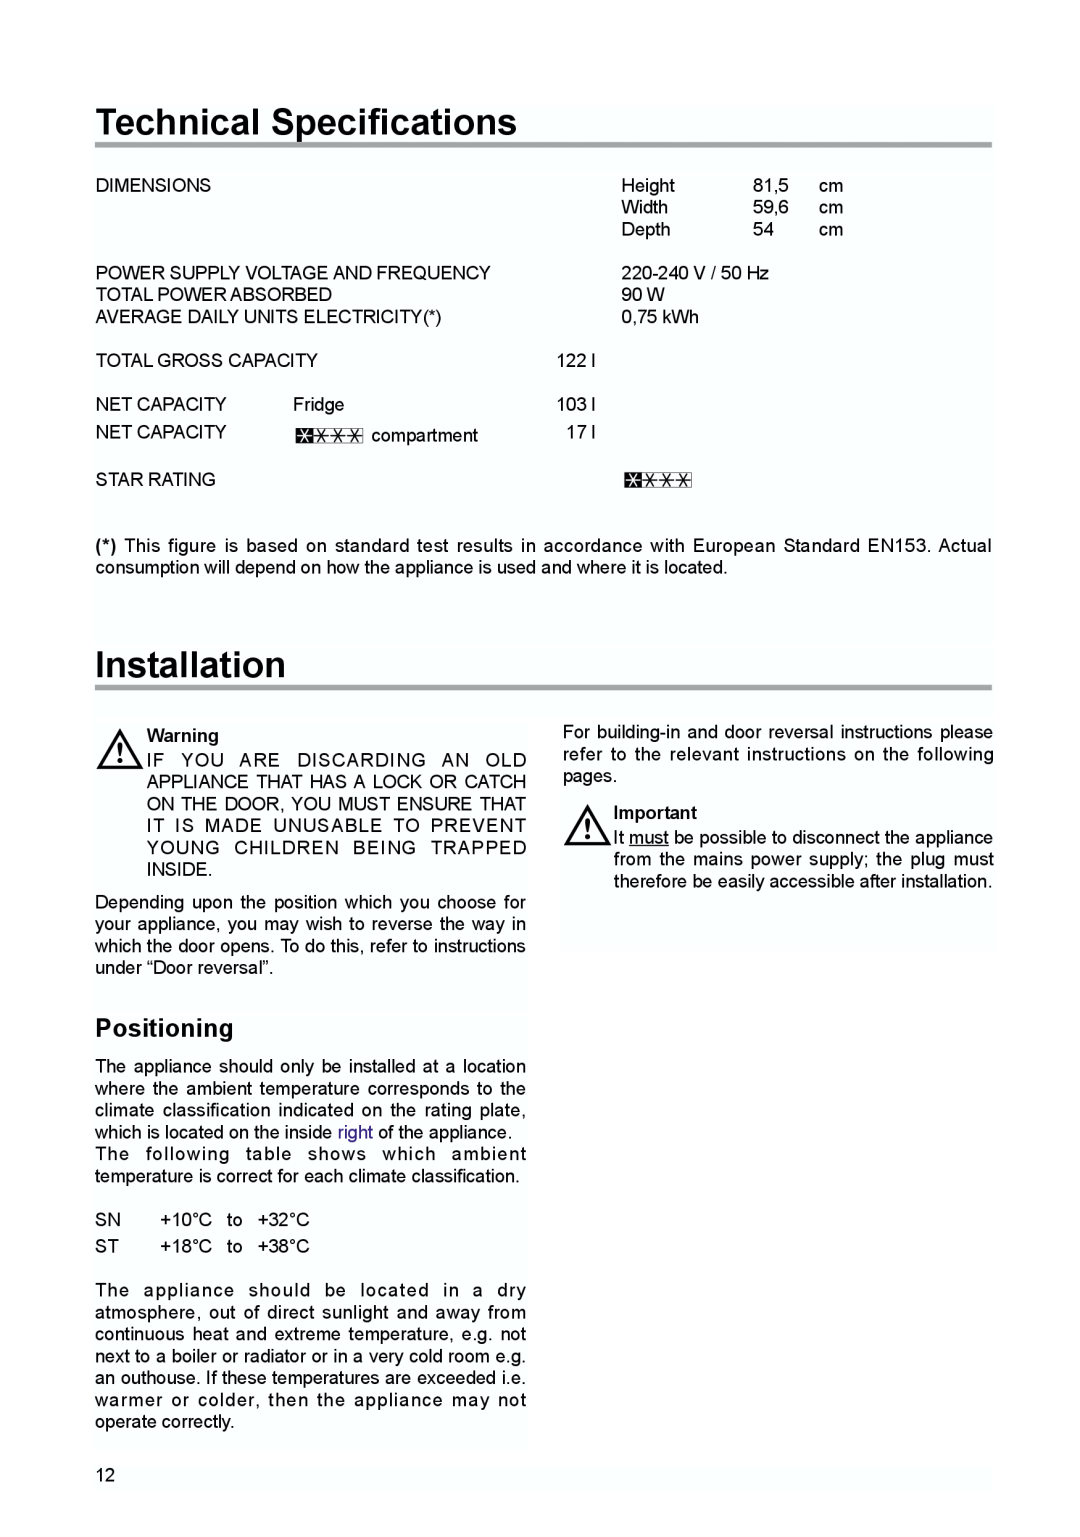 Tricity Bendix TBUR 120 installation instructions Technical Specifications, Installation, Positioning 